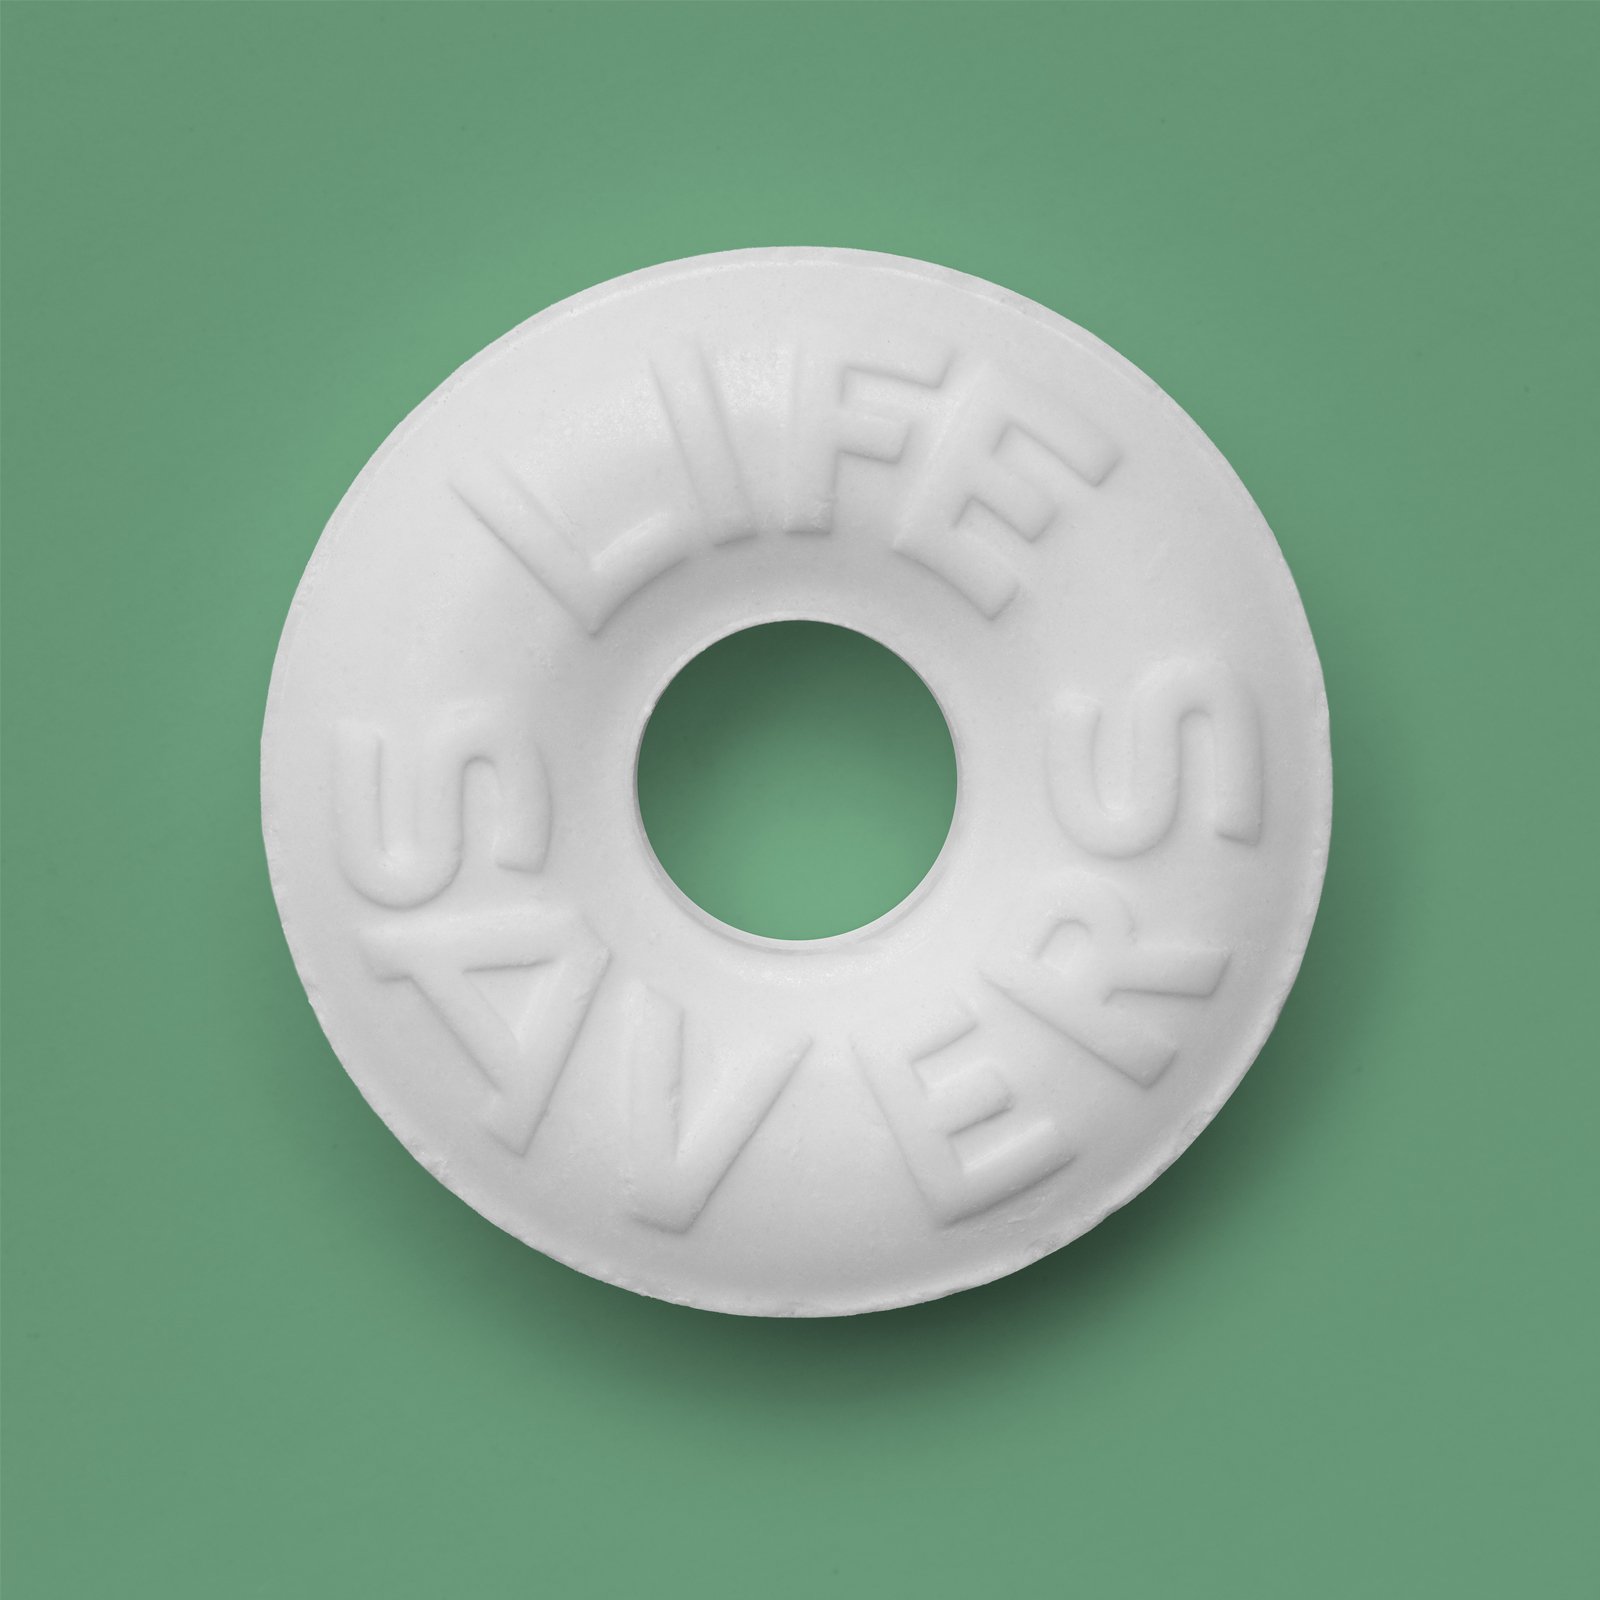 Lifesavers-white-green-01.jpg